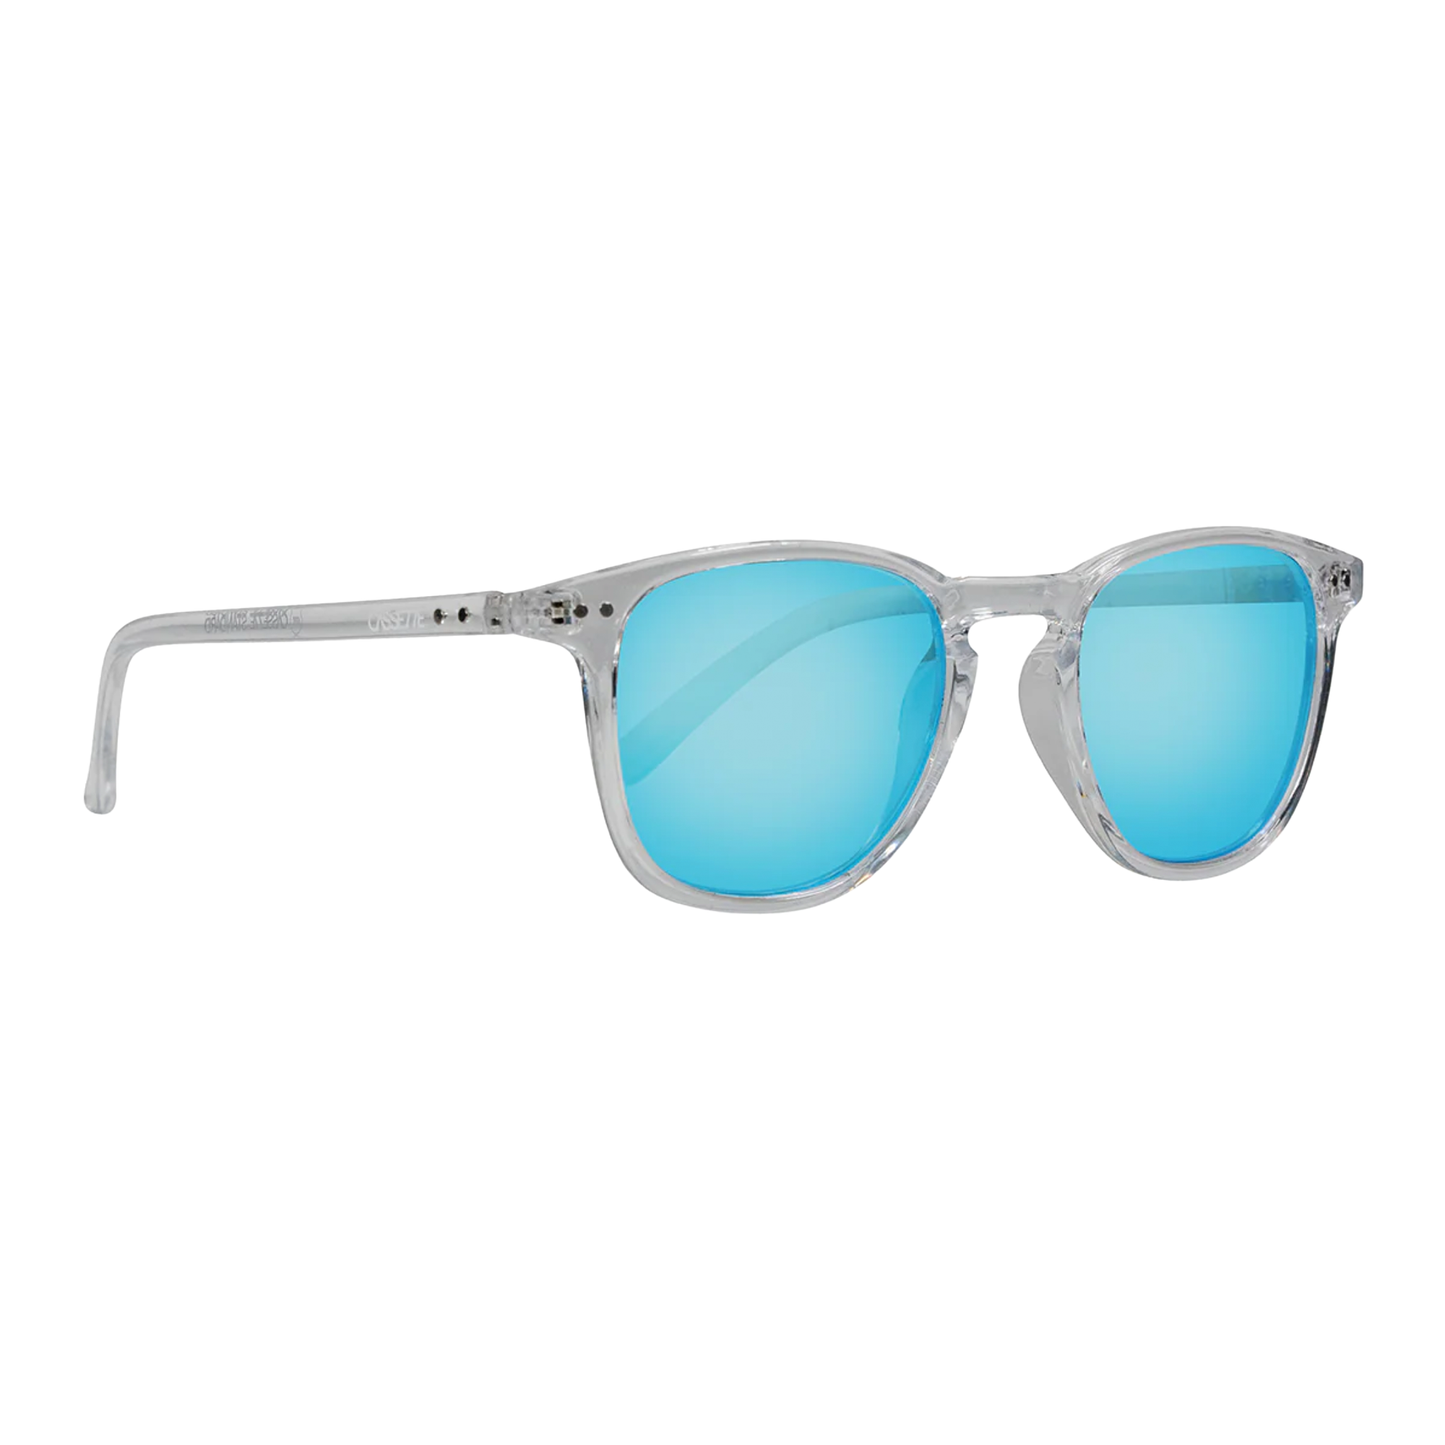 Cassette Standard Sunglasses - Clear / Sky Blue Mirror Lens